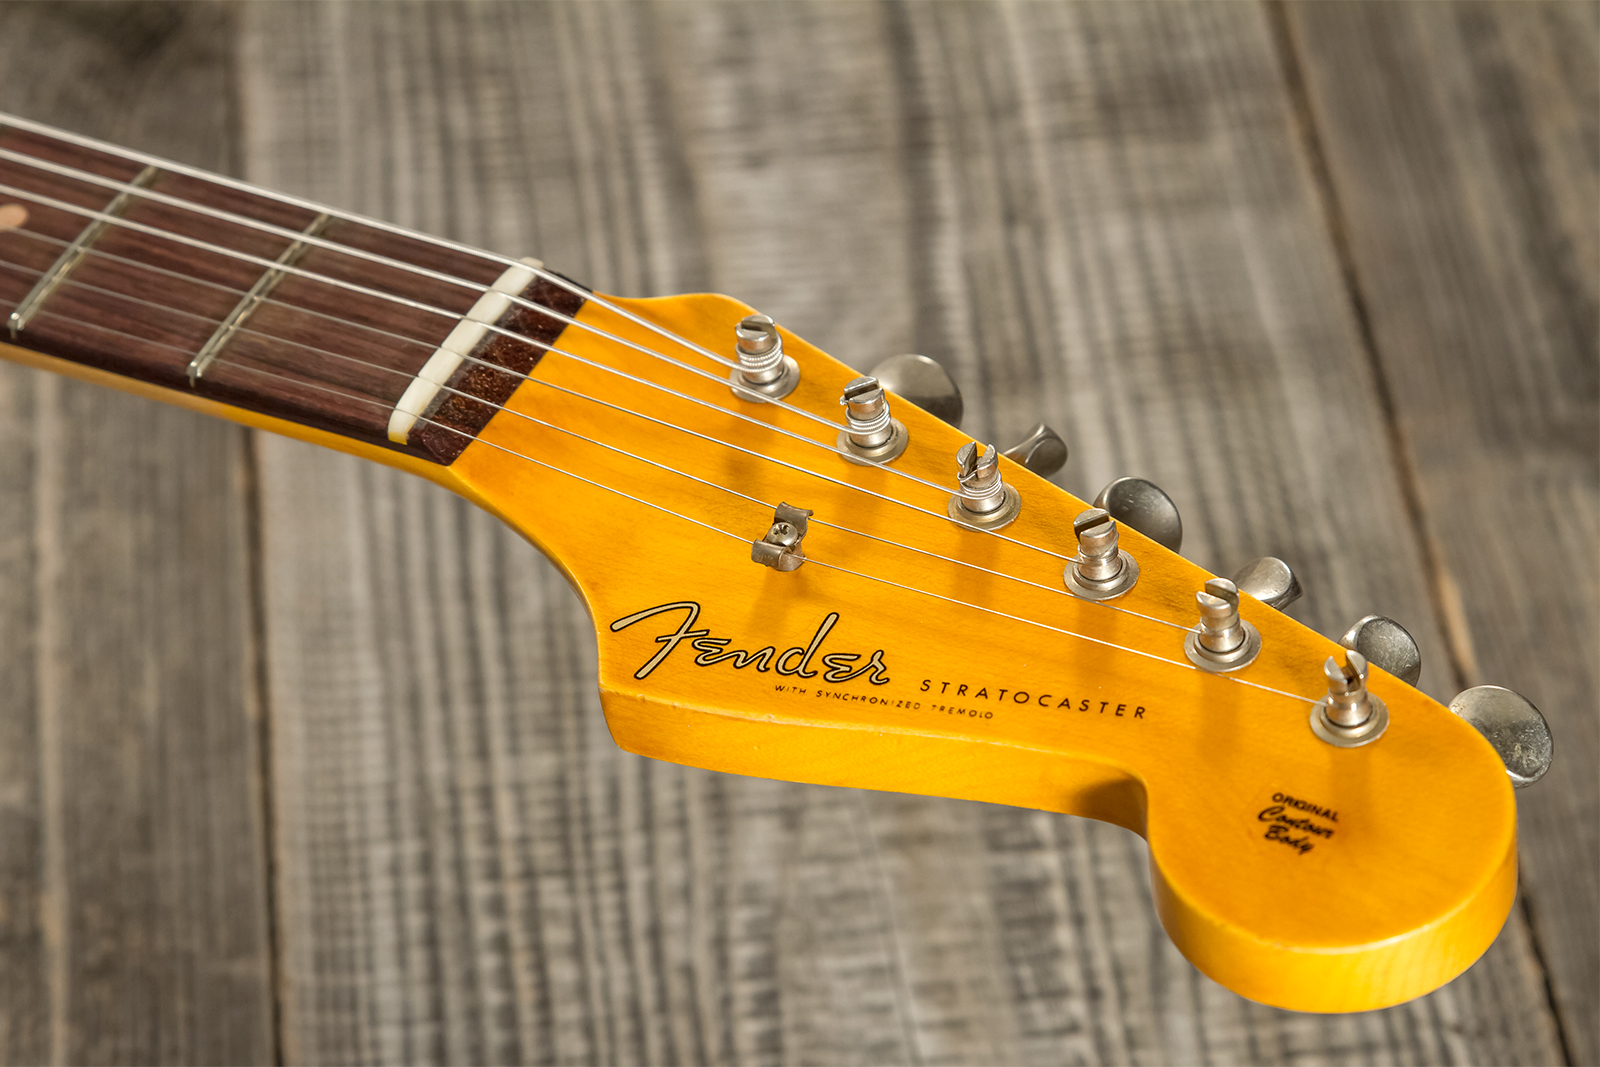 Fender Custom Shop Strat 1959 3s Trem Rw #cz570883 - Journeyman Relic Teal Green Metallic - Guitarra eléctrica con forma de str. - Variation 6